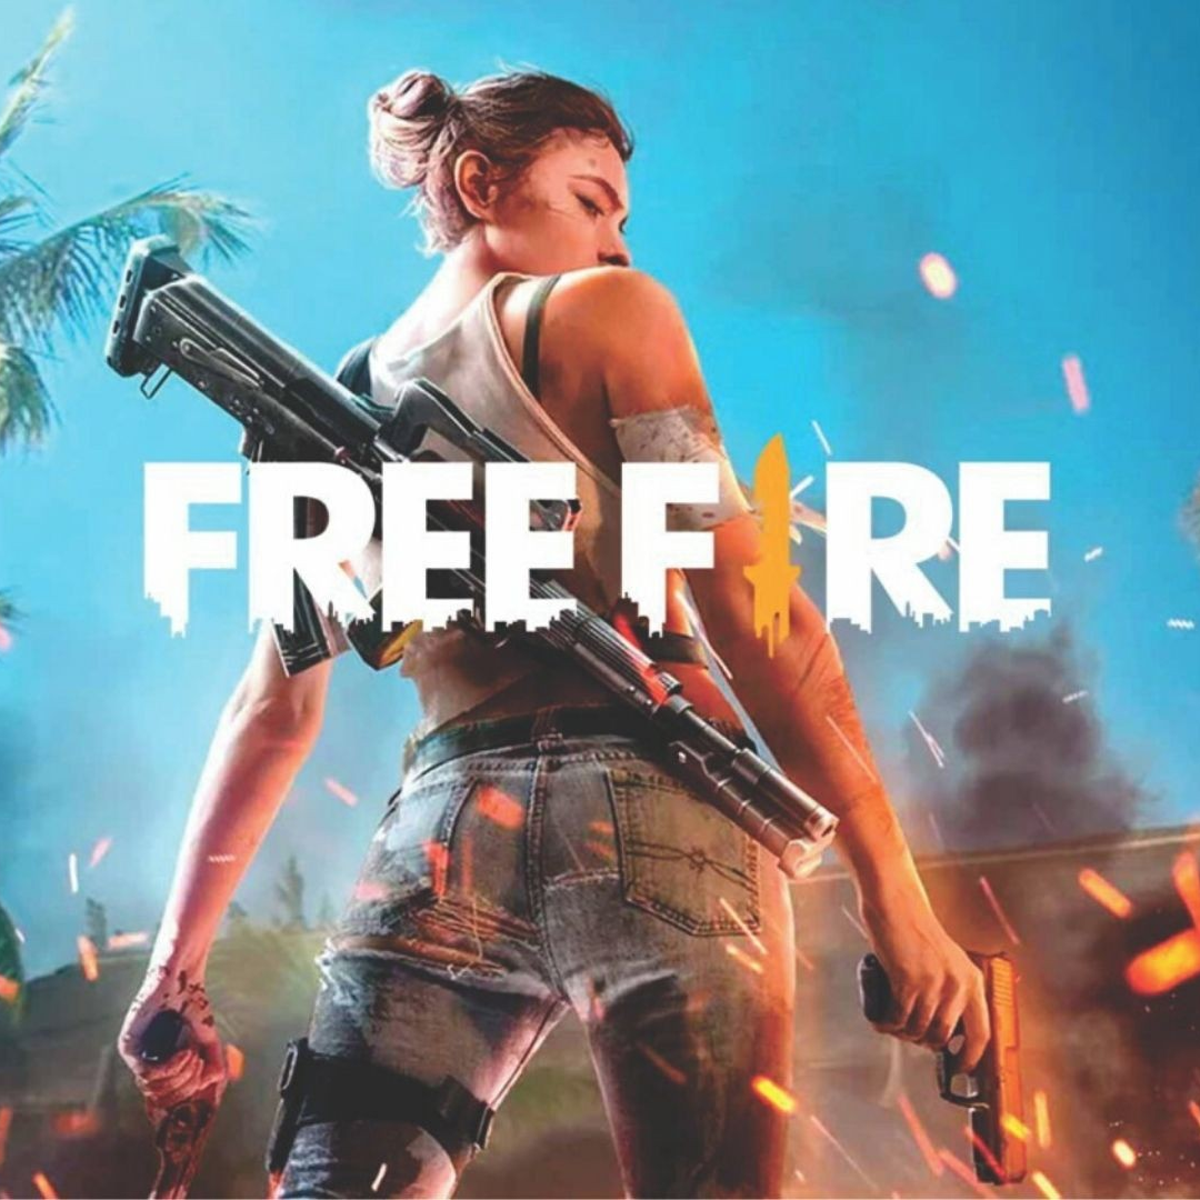 Free Fire - Lista de promo codes (Abril 2022)